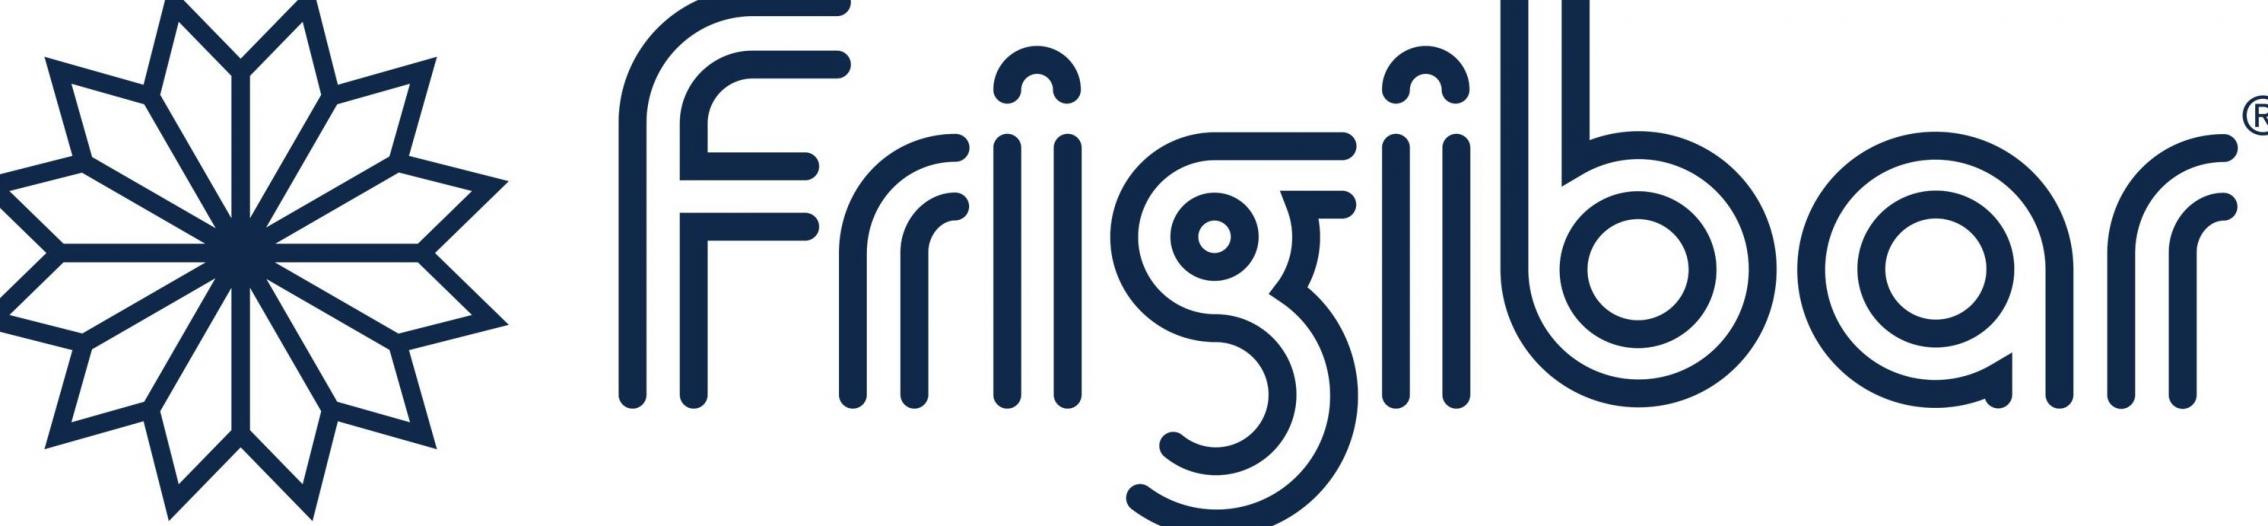 frigibar Logo